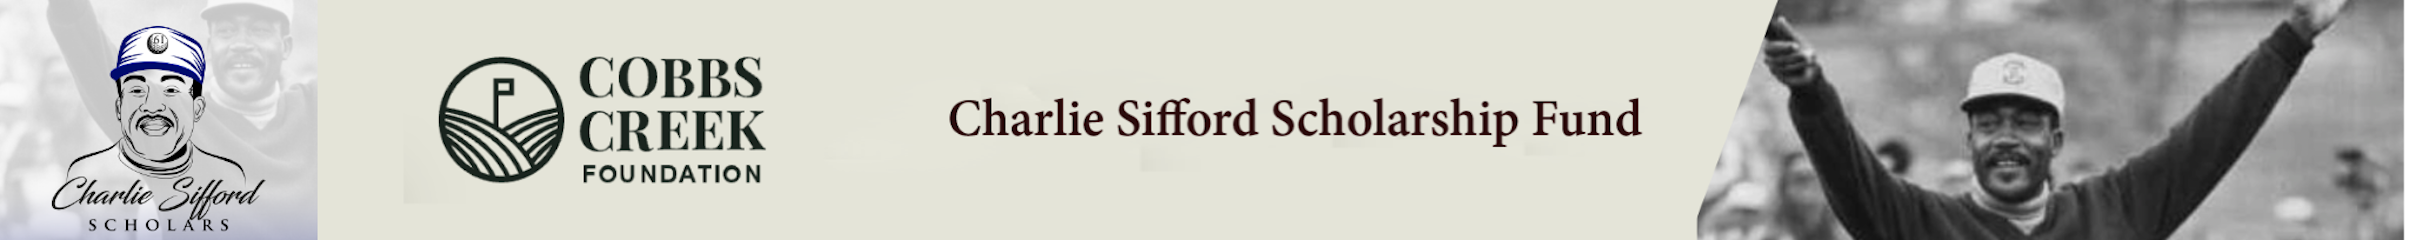 Charlie Sifford Foundation Scholarship logo